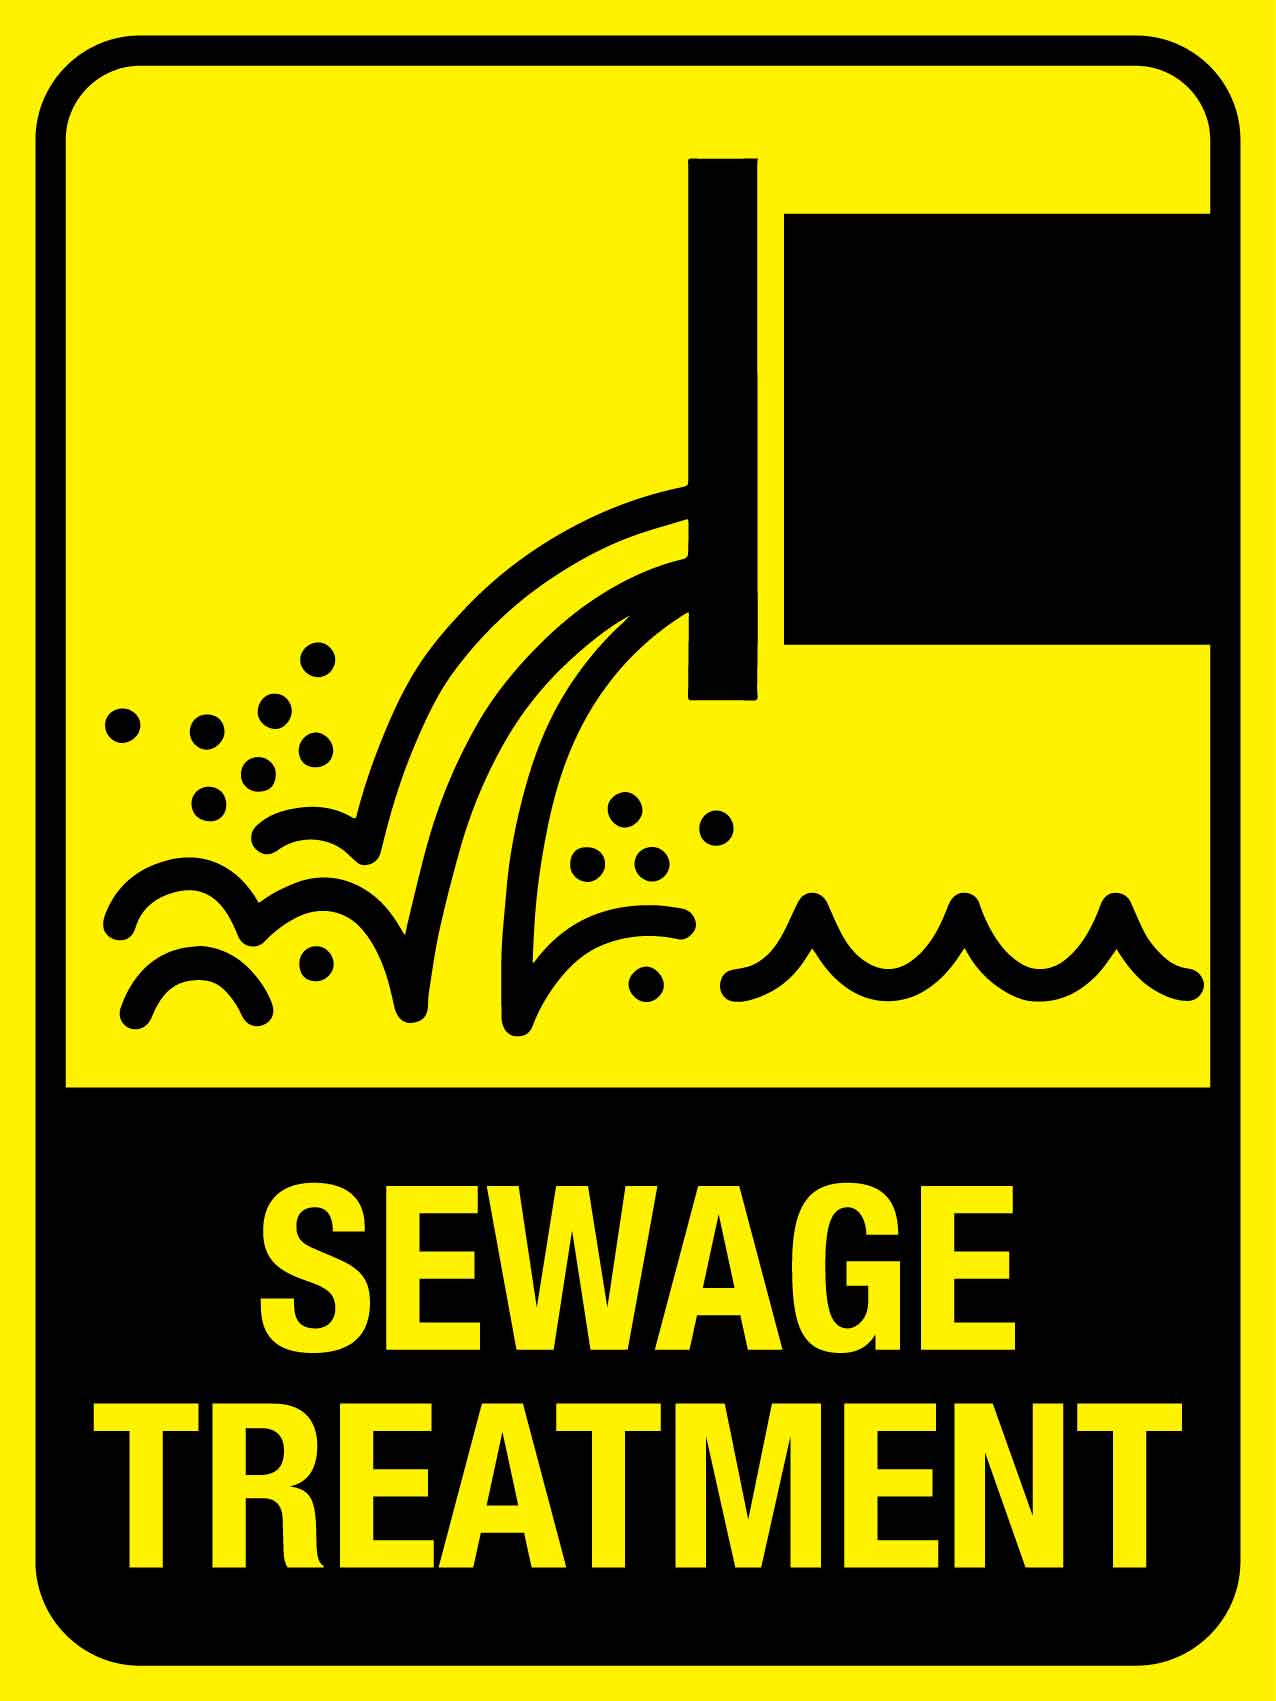 Sewage Treatment Sign